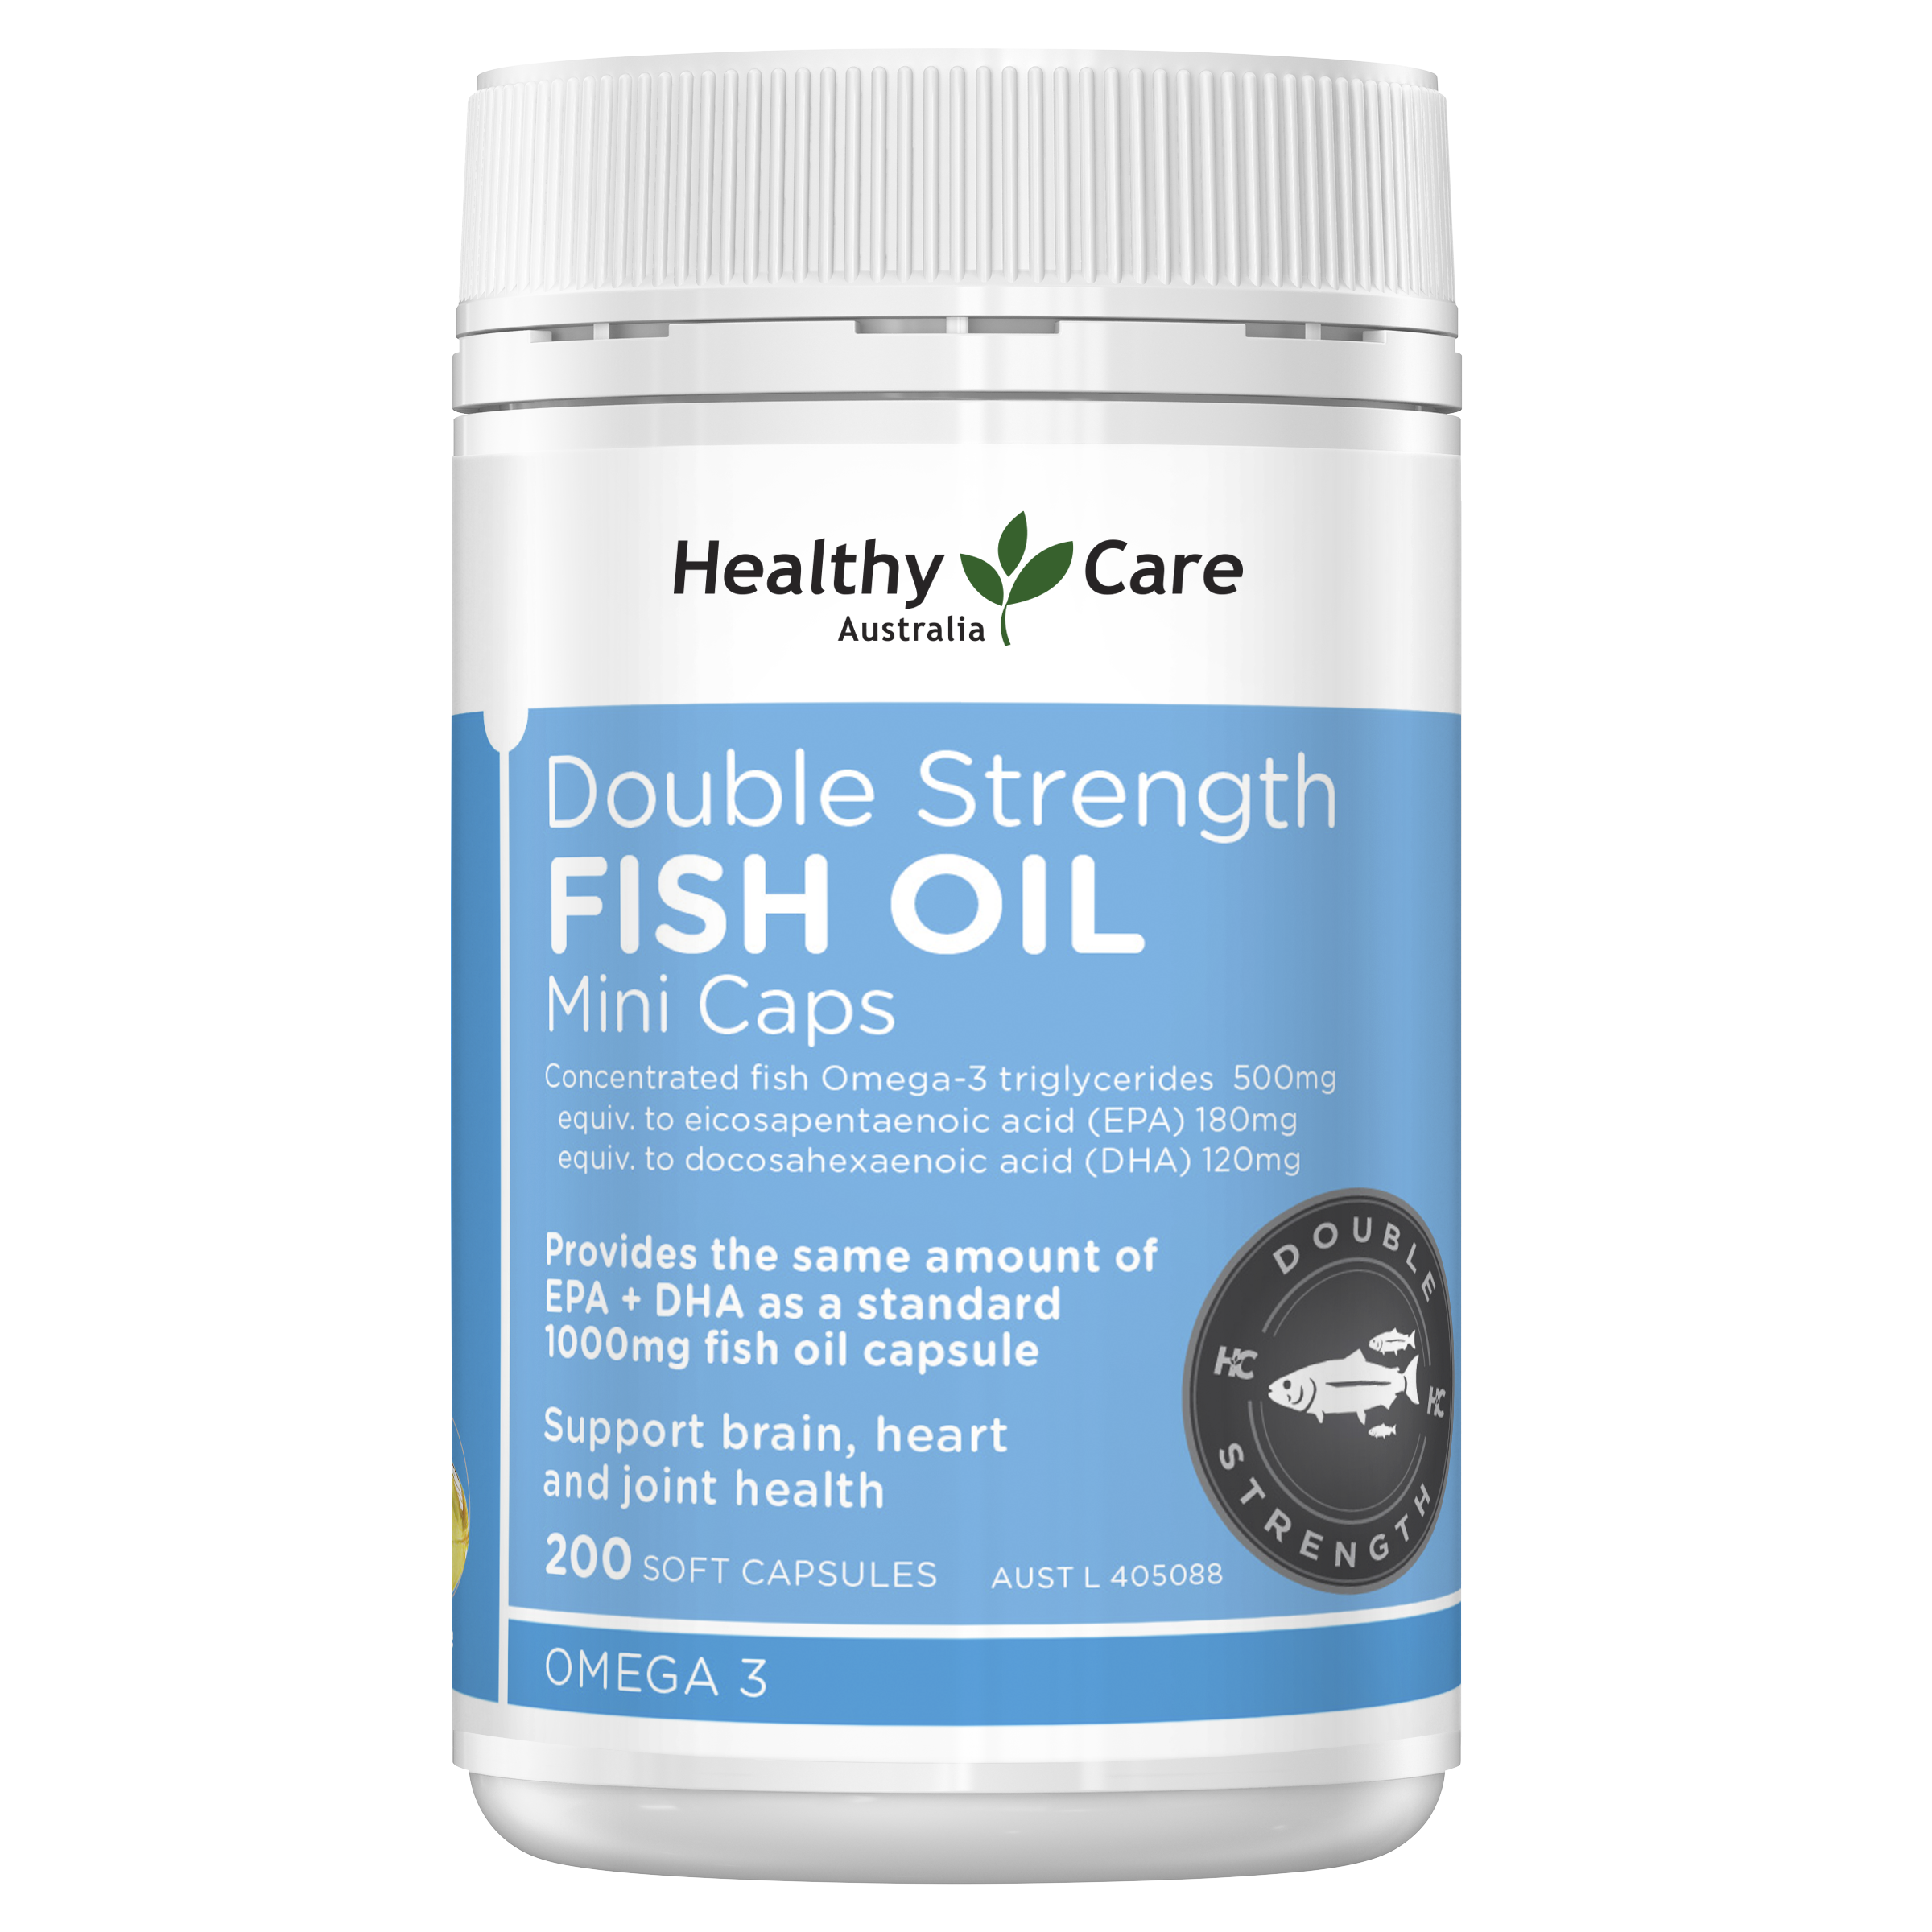 Healthy Care Double Strength Fish Oil Mini Caps - 200 Capsules